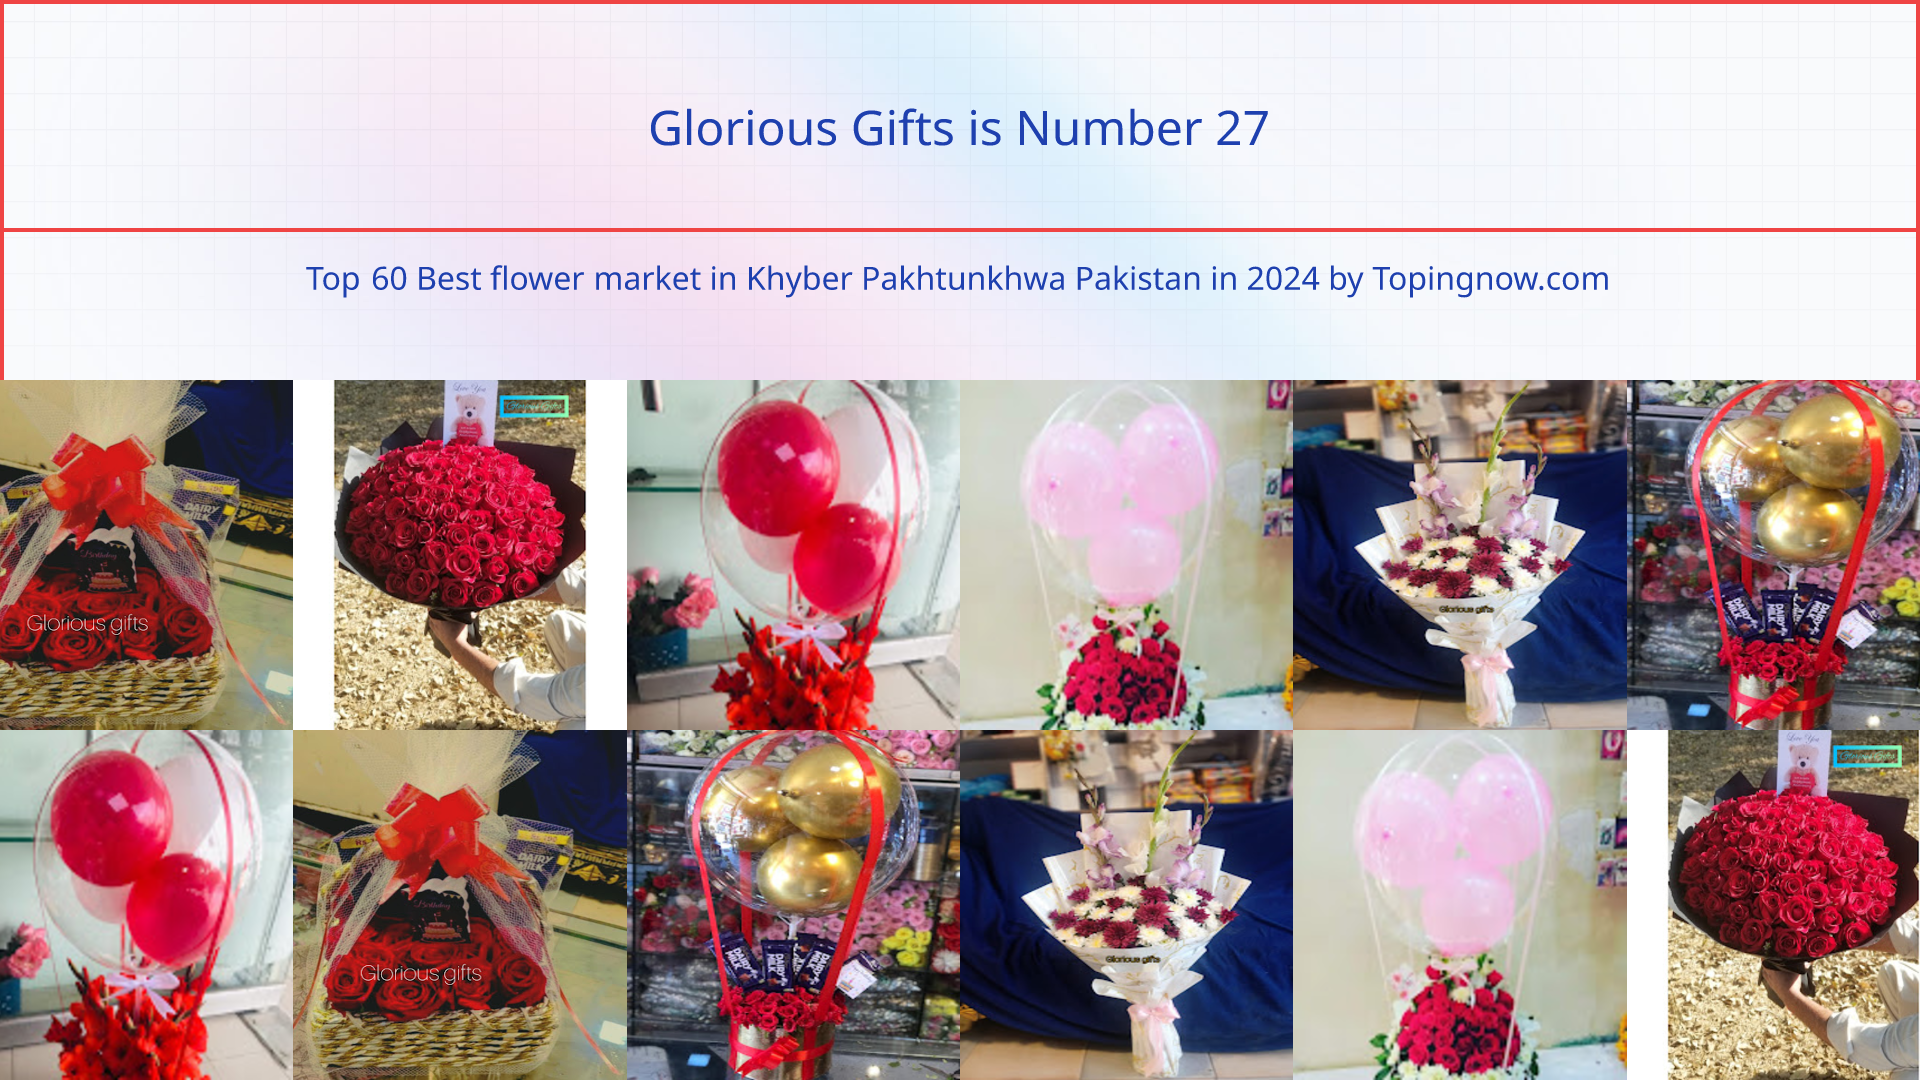 Glorious Gifts: Top 60 Best flower market in Khyber Pakhtunkhwa Pakistan in 2024